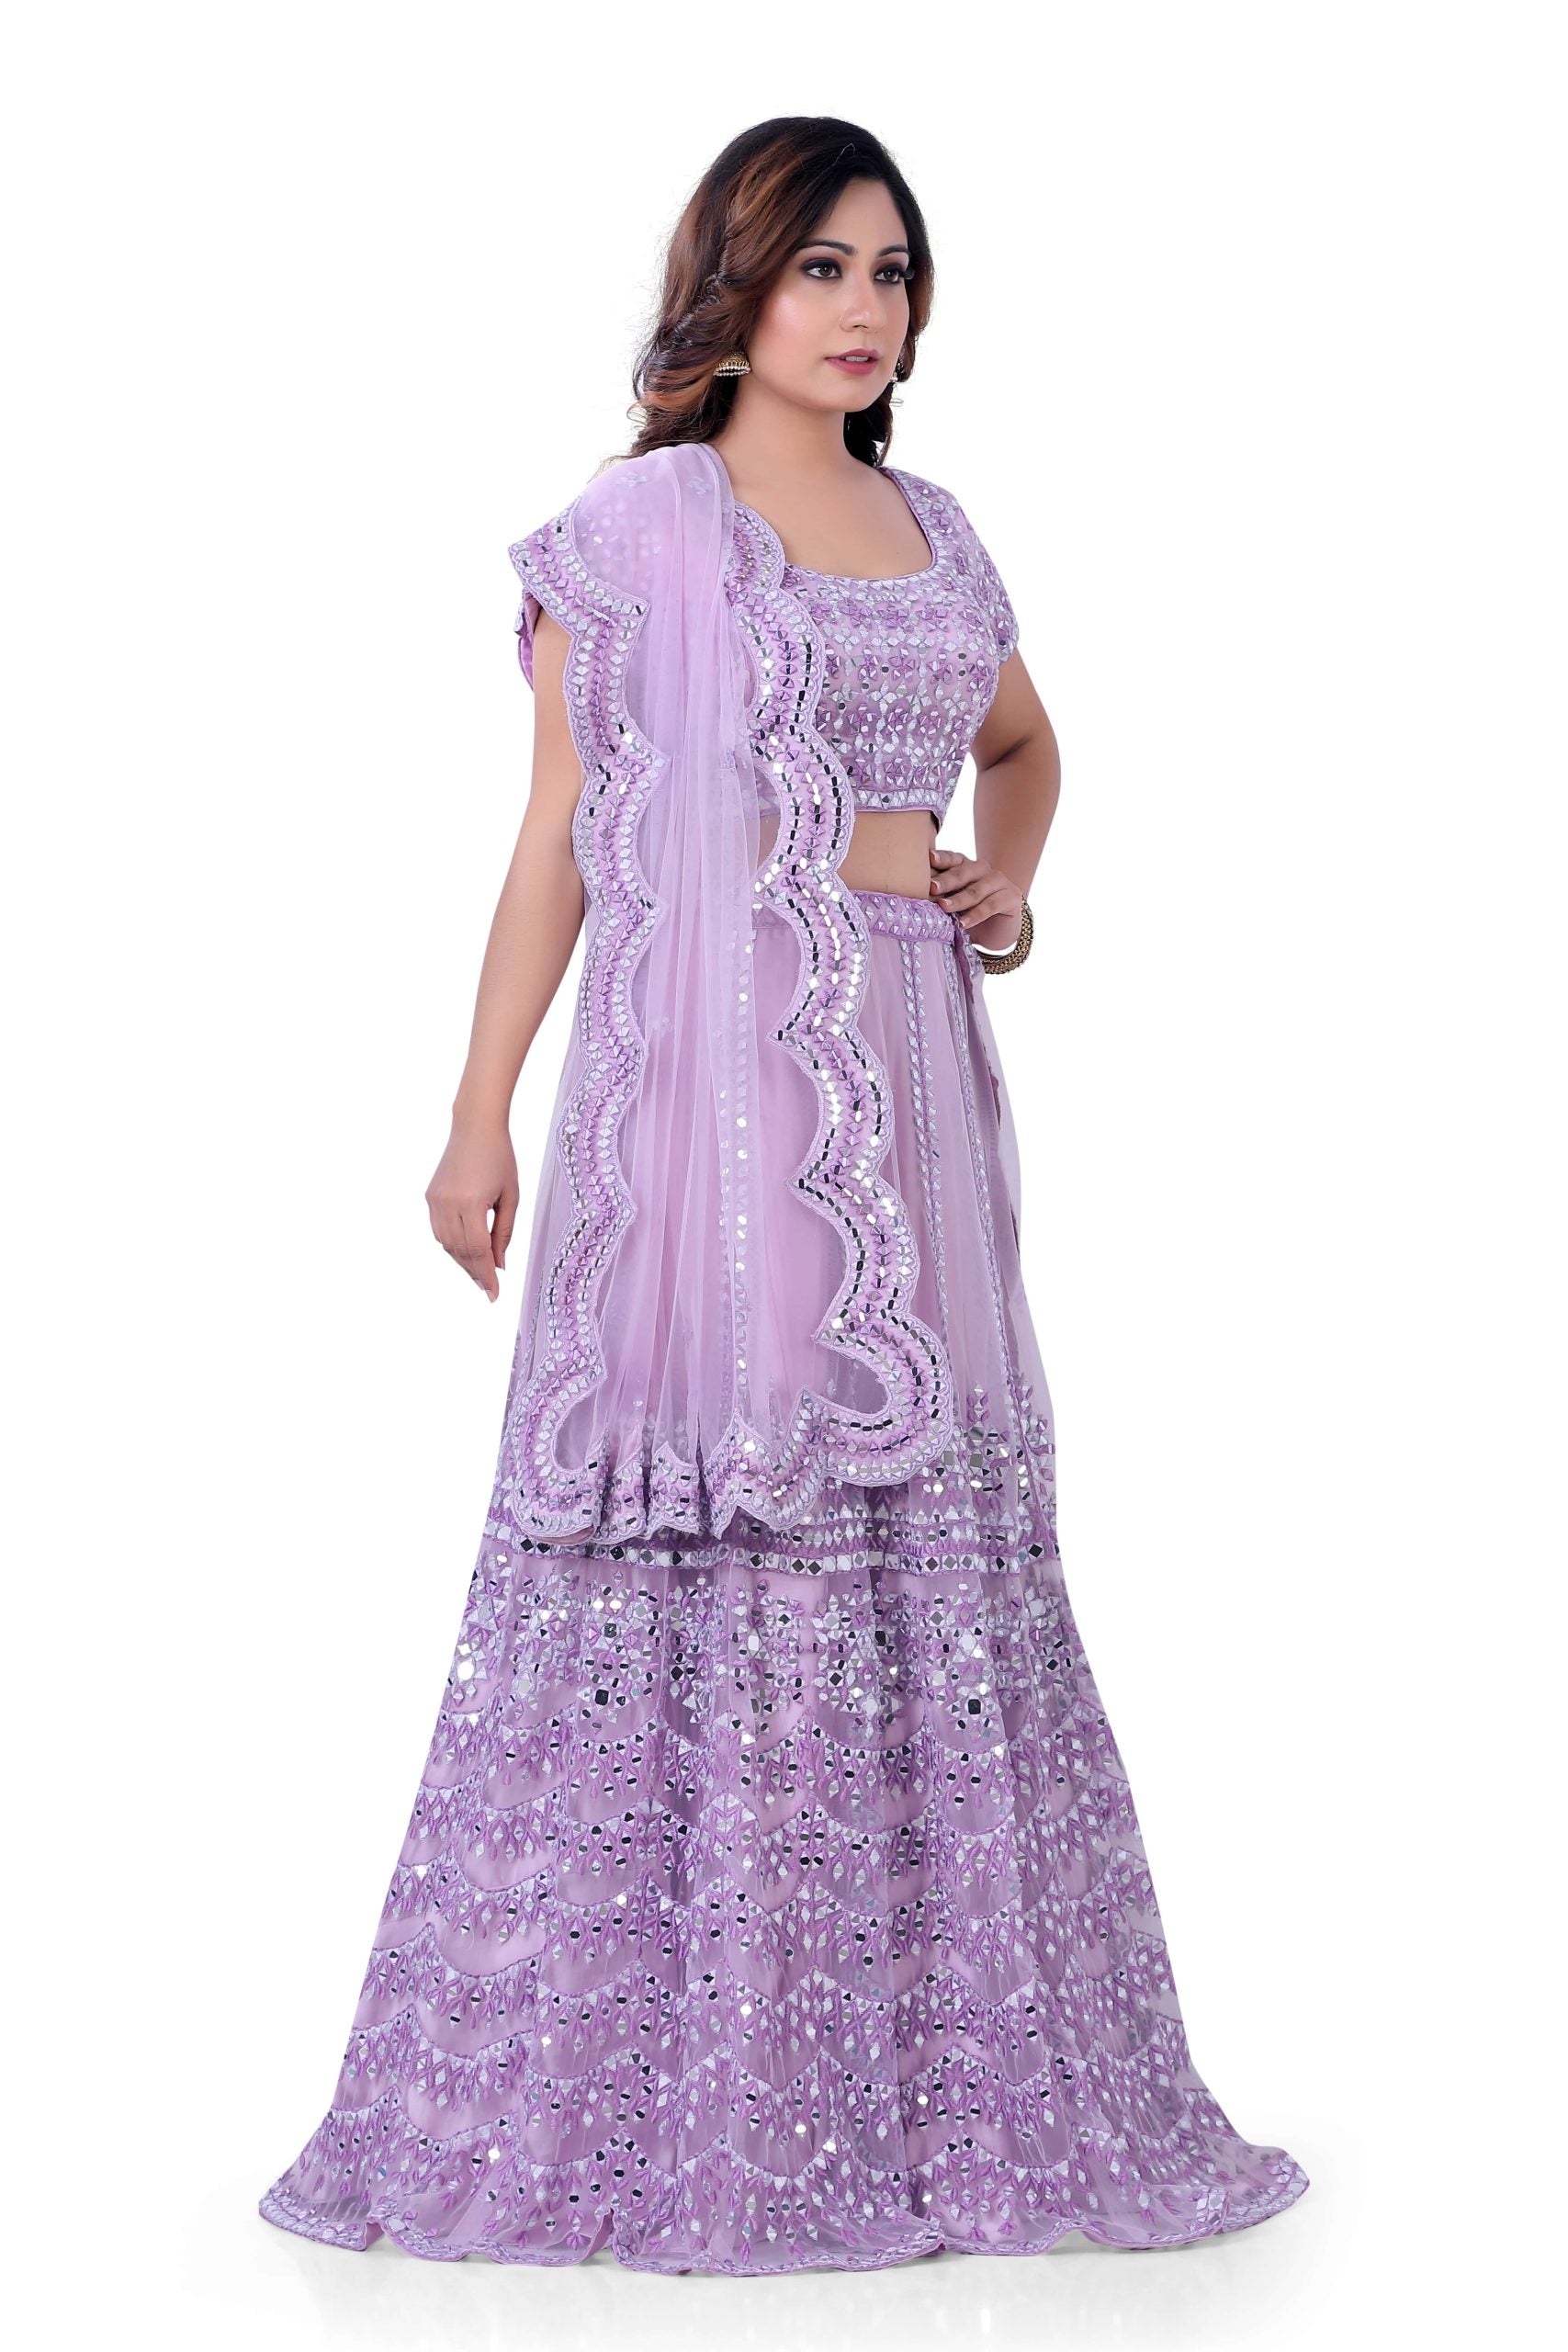 Bridal Lehenga Choli in Purple Color with Heavy Mirror work